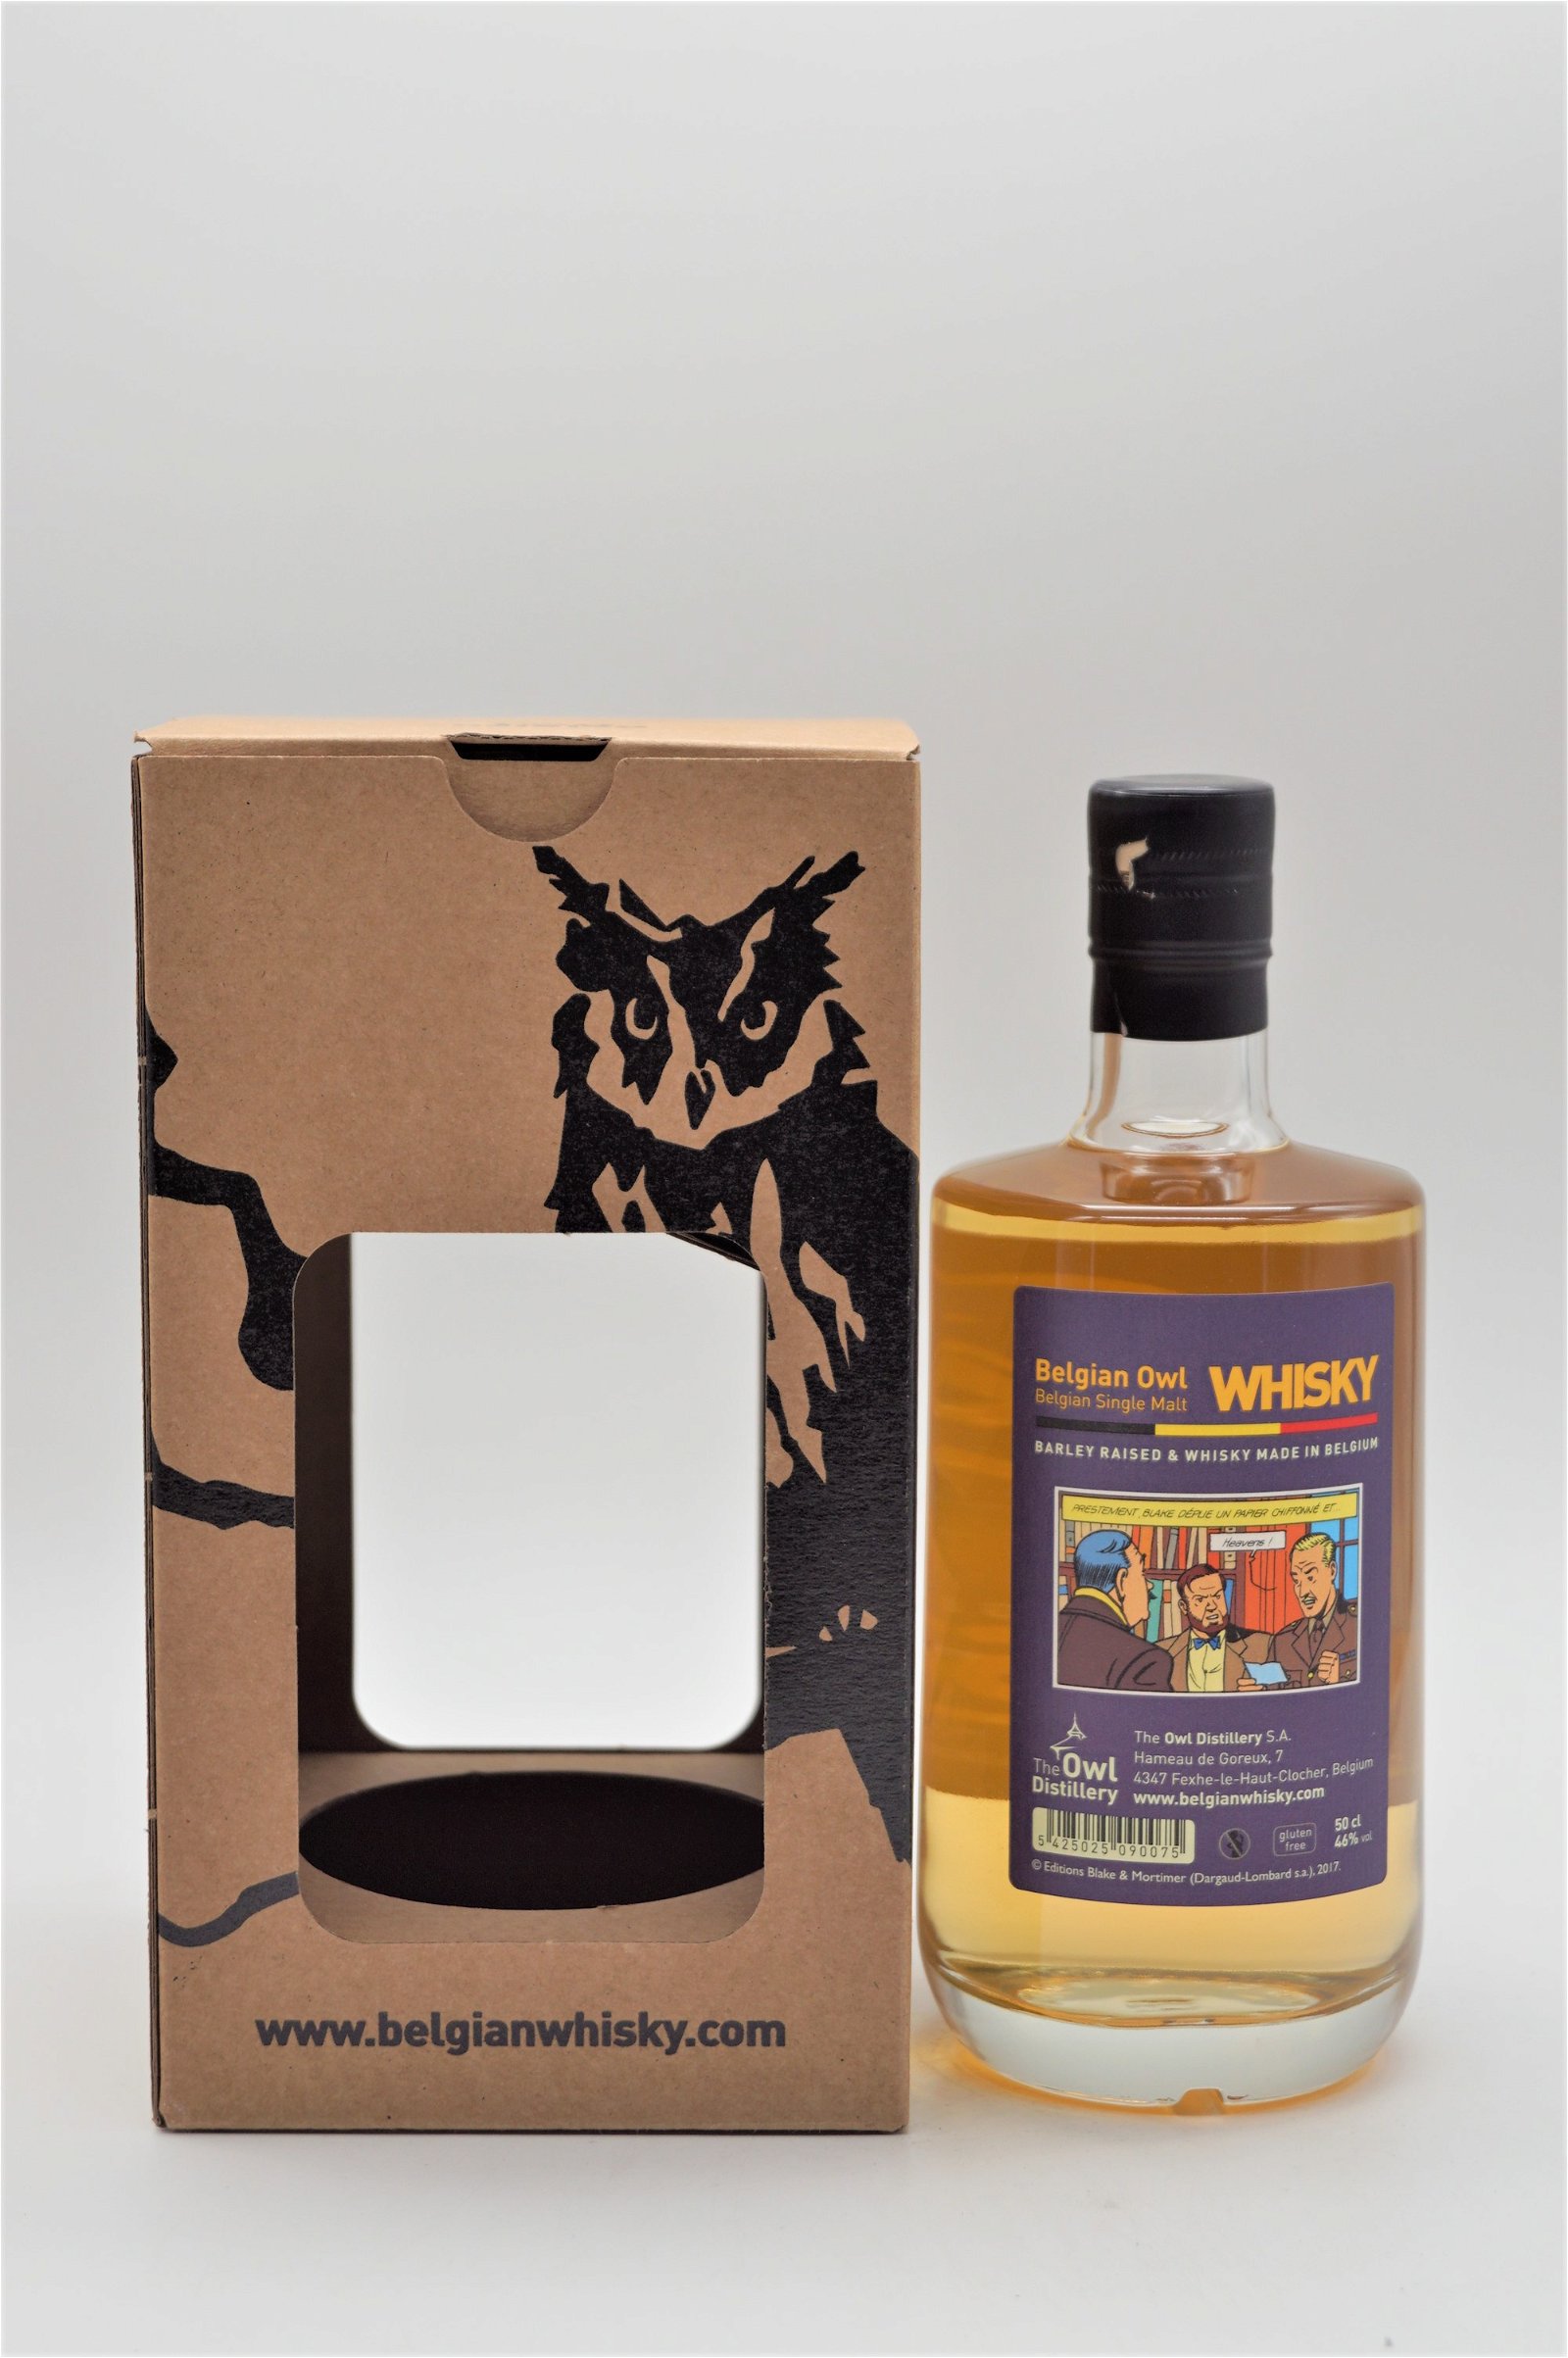 Belgian Owl Belgian Single Malt Whisky by Jove Edition No 2